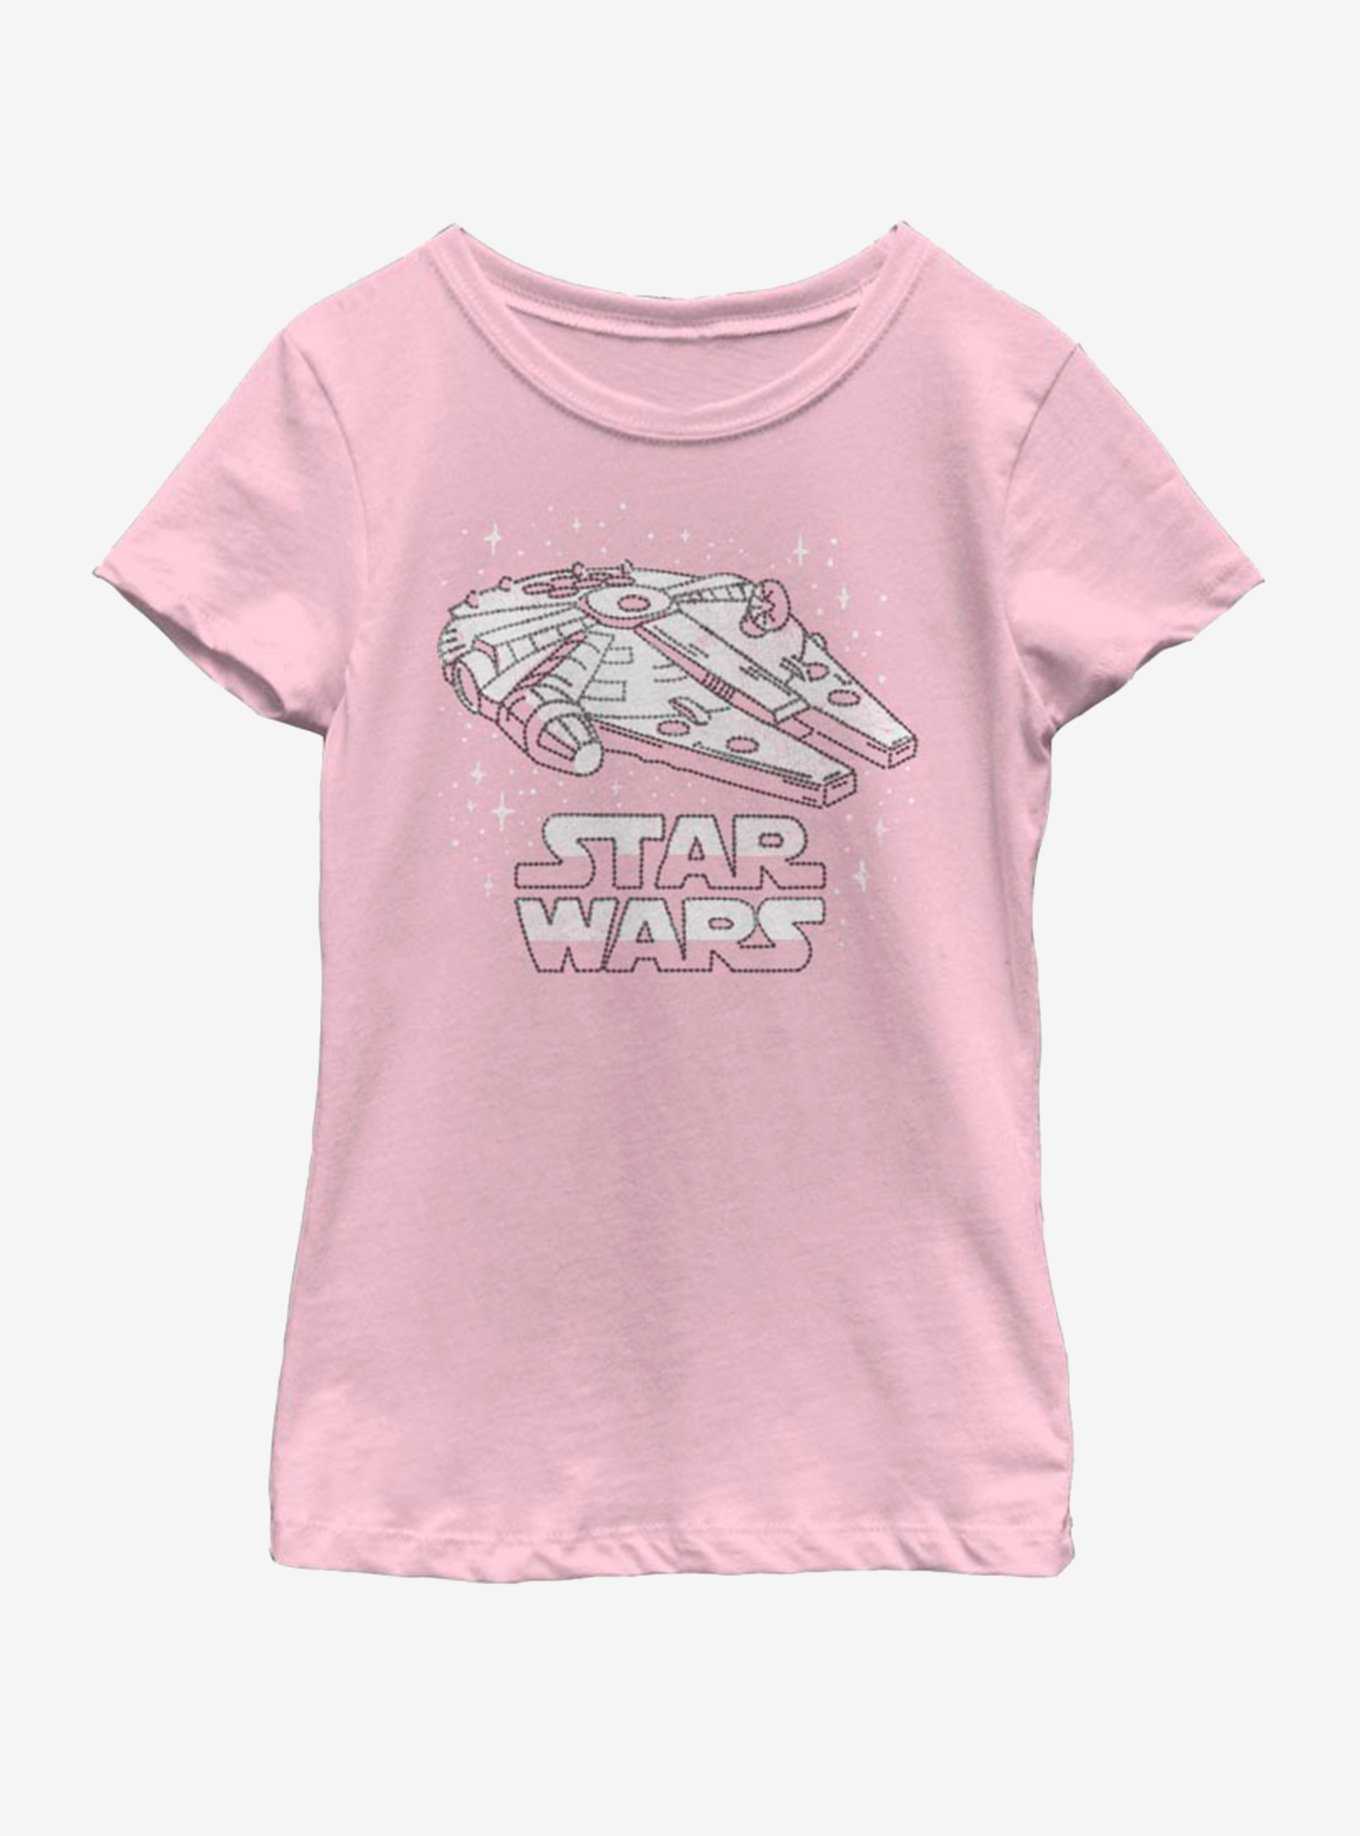 Star Wars Vintage Wars Youth Girls T-Shirt, , hi-res